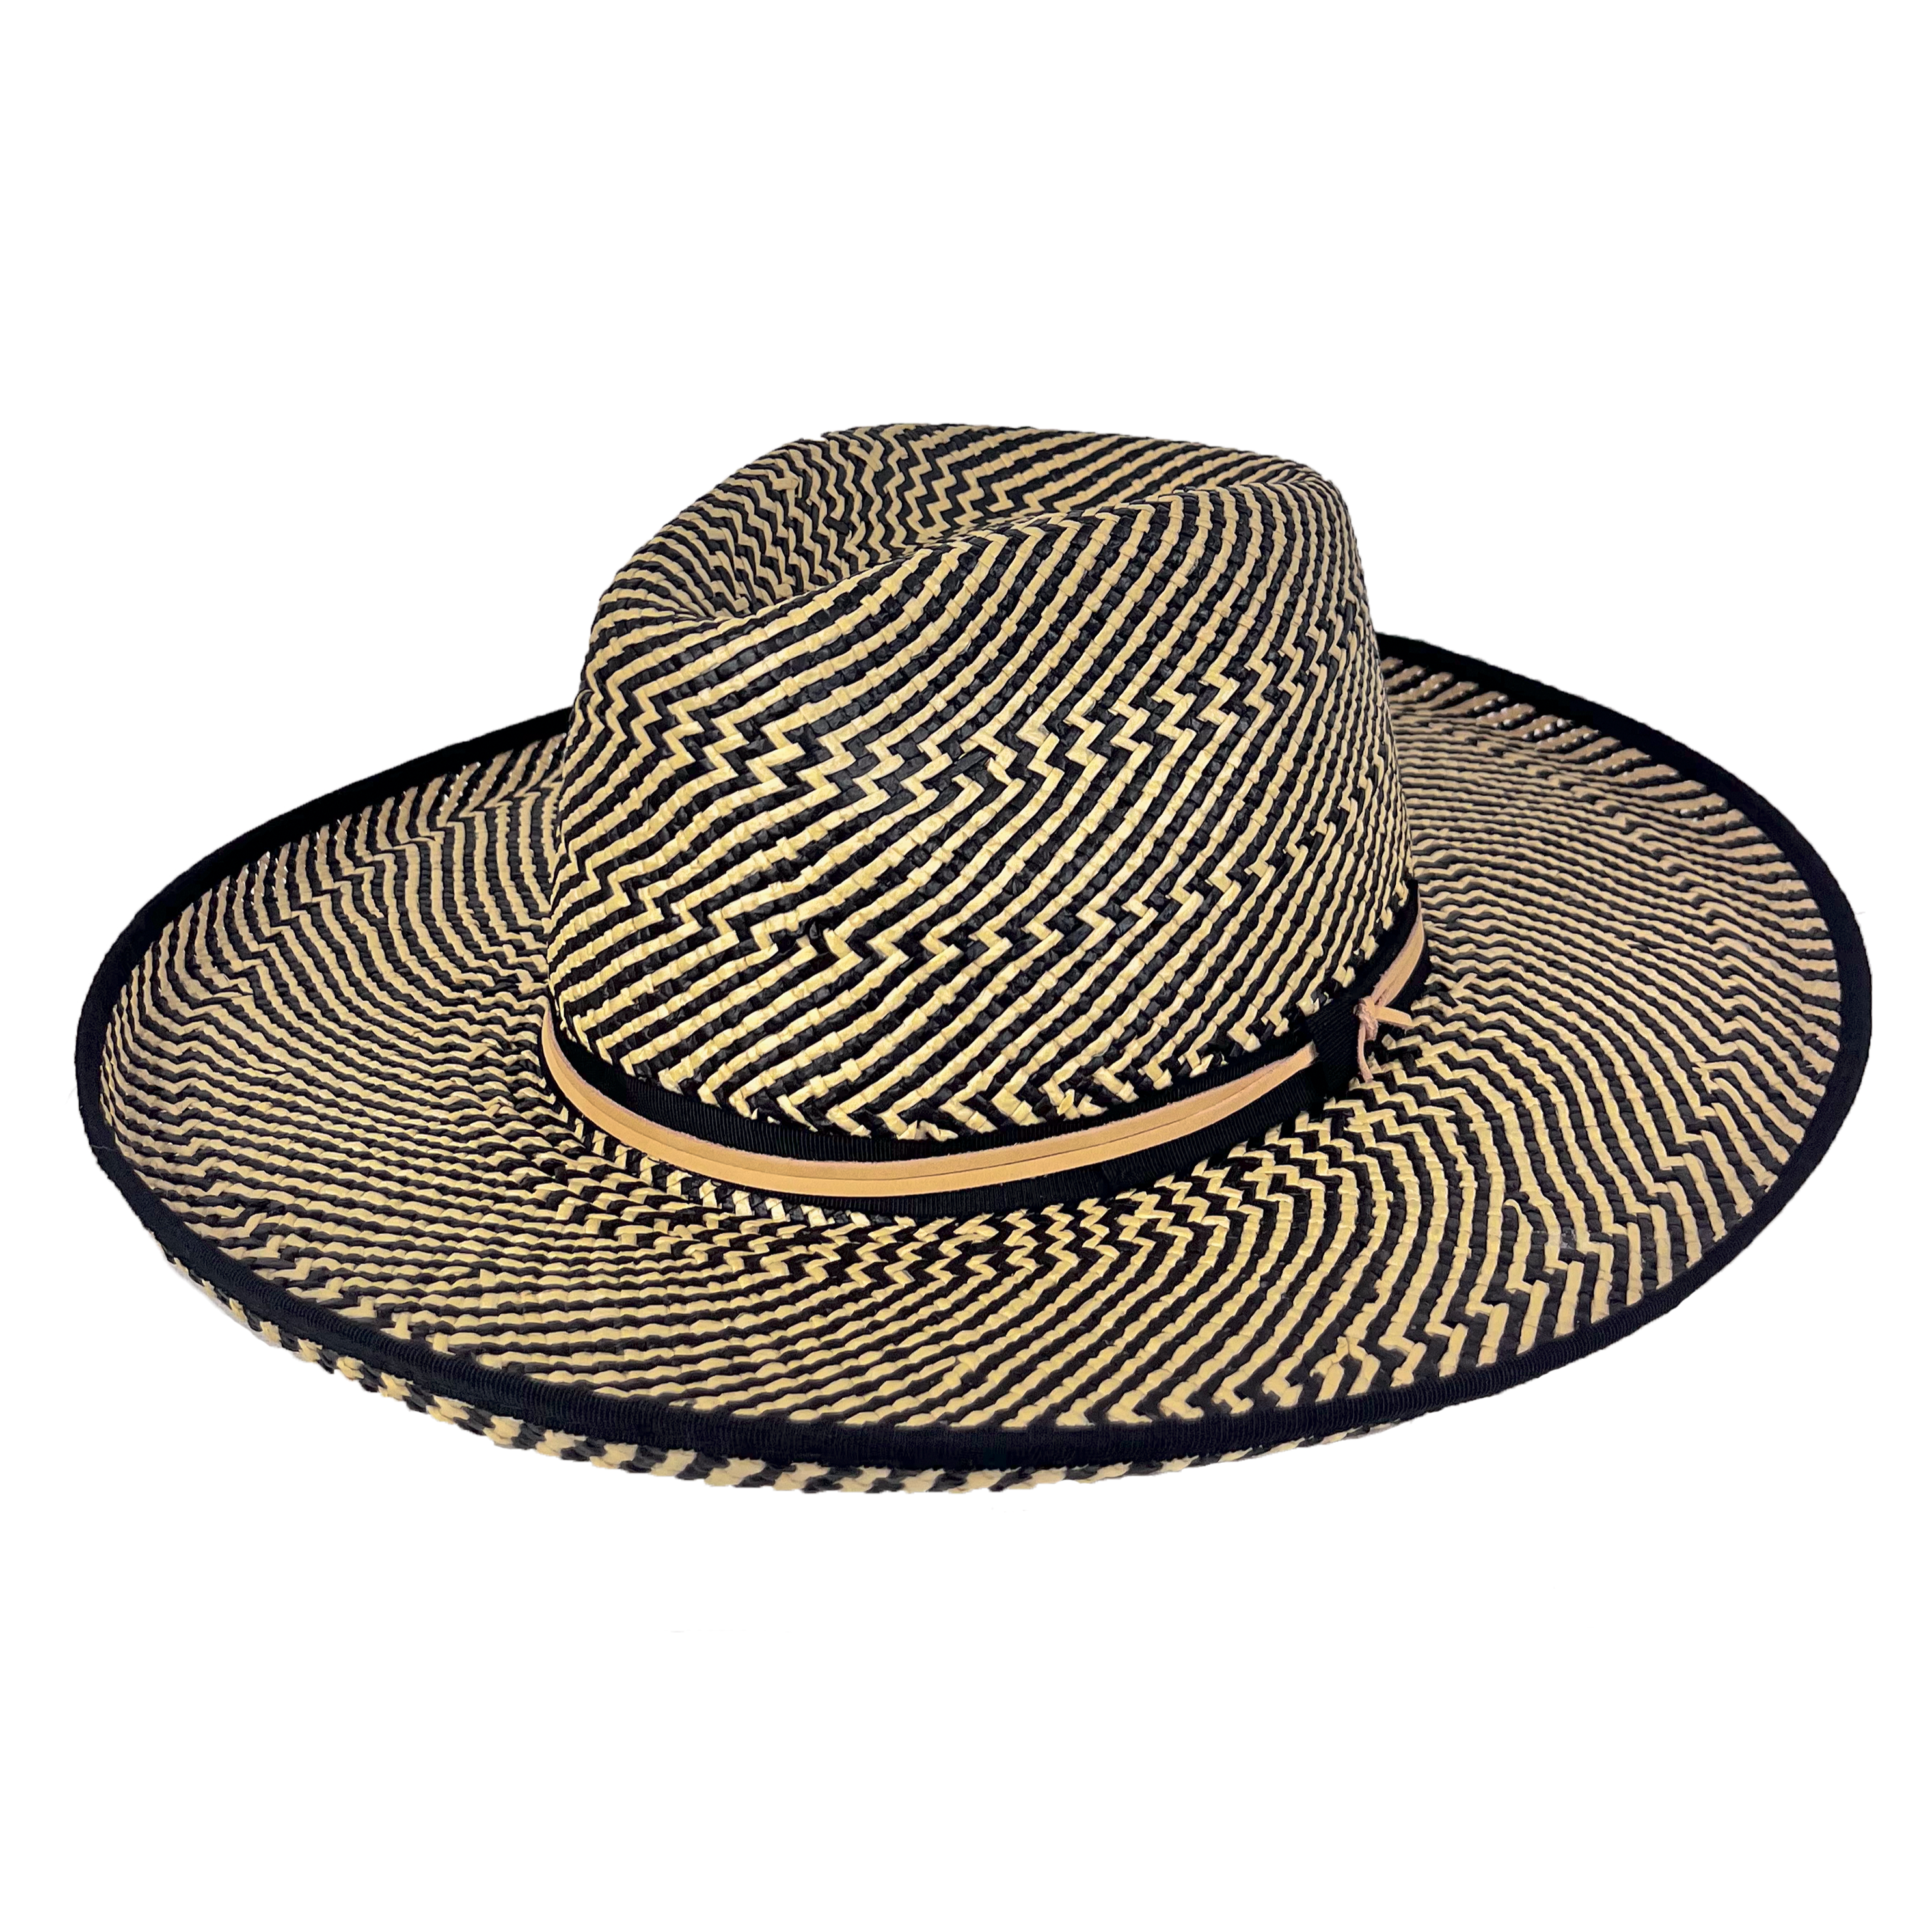 Galilee Rancher Straw Hat - Black/Tan